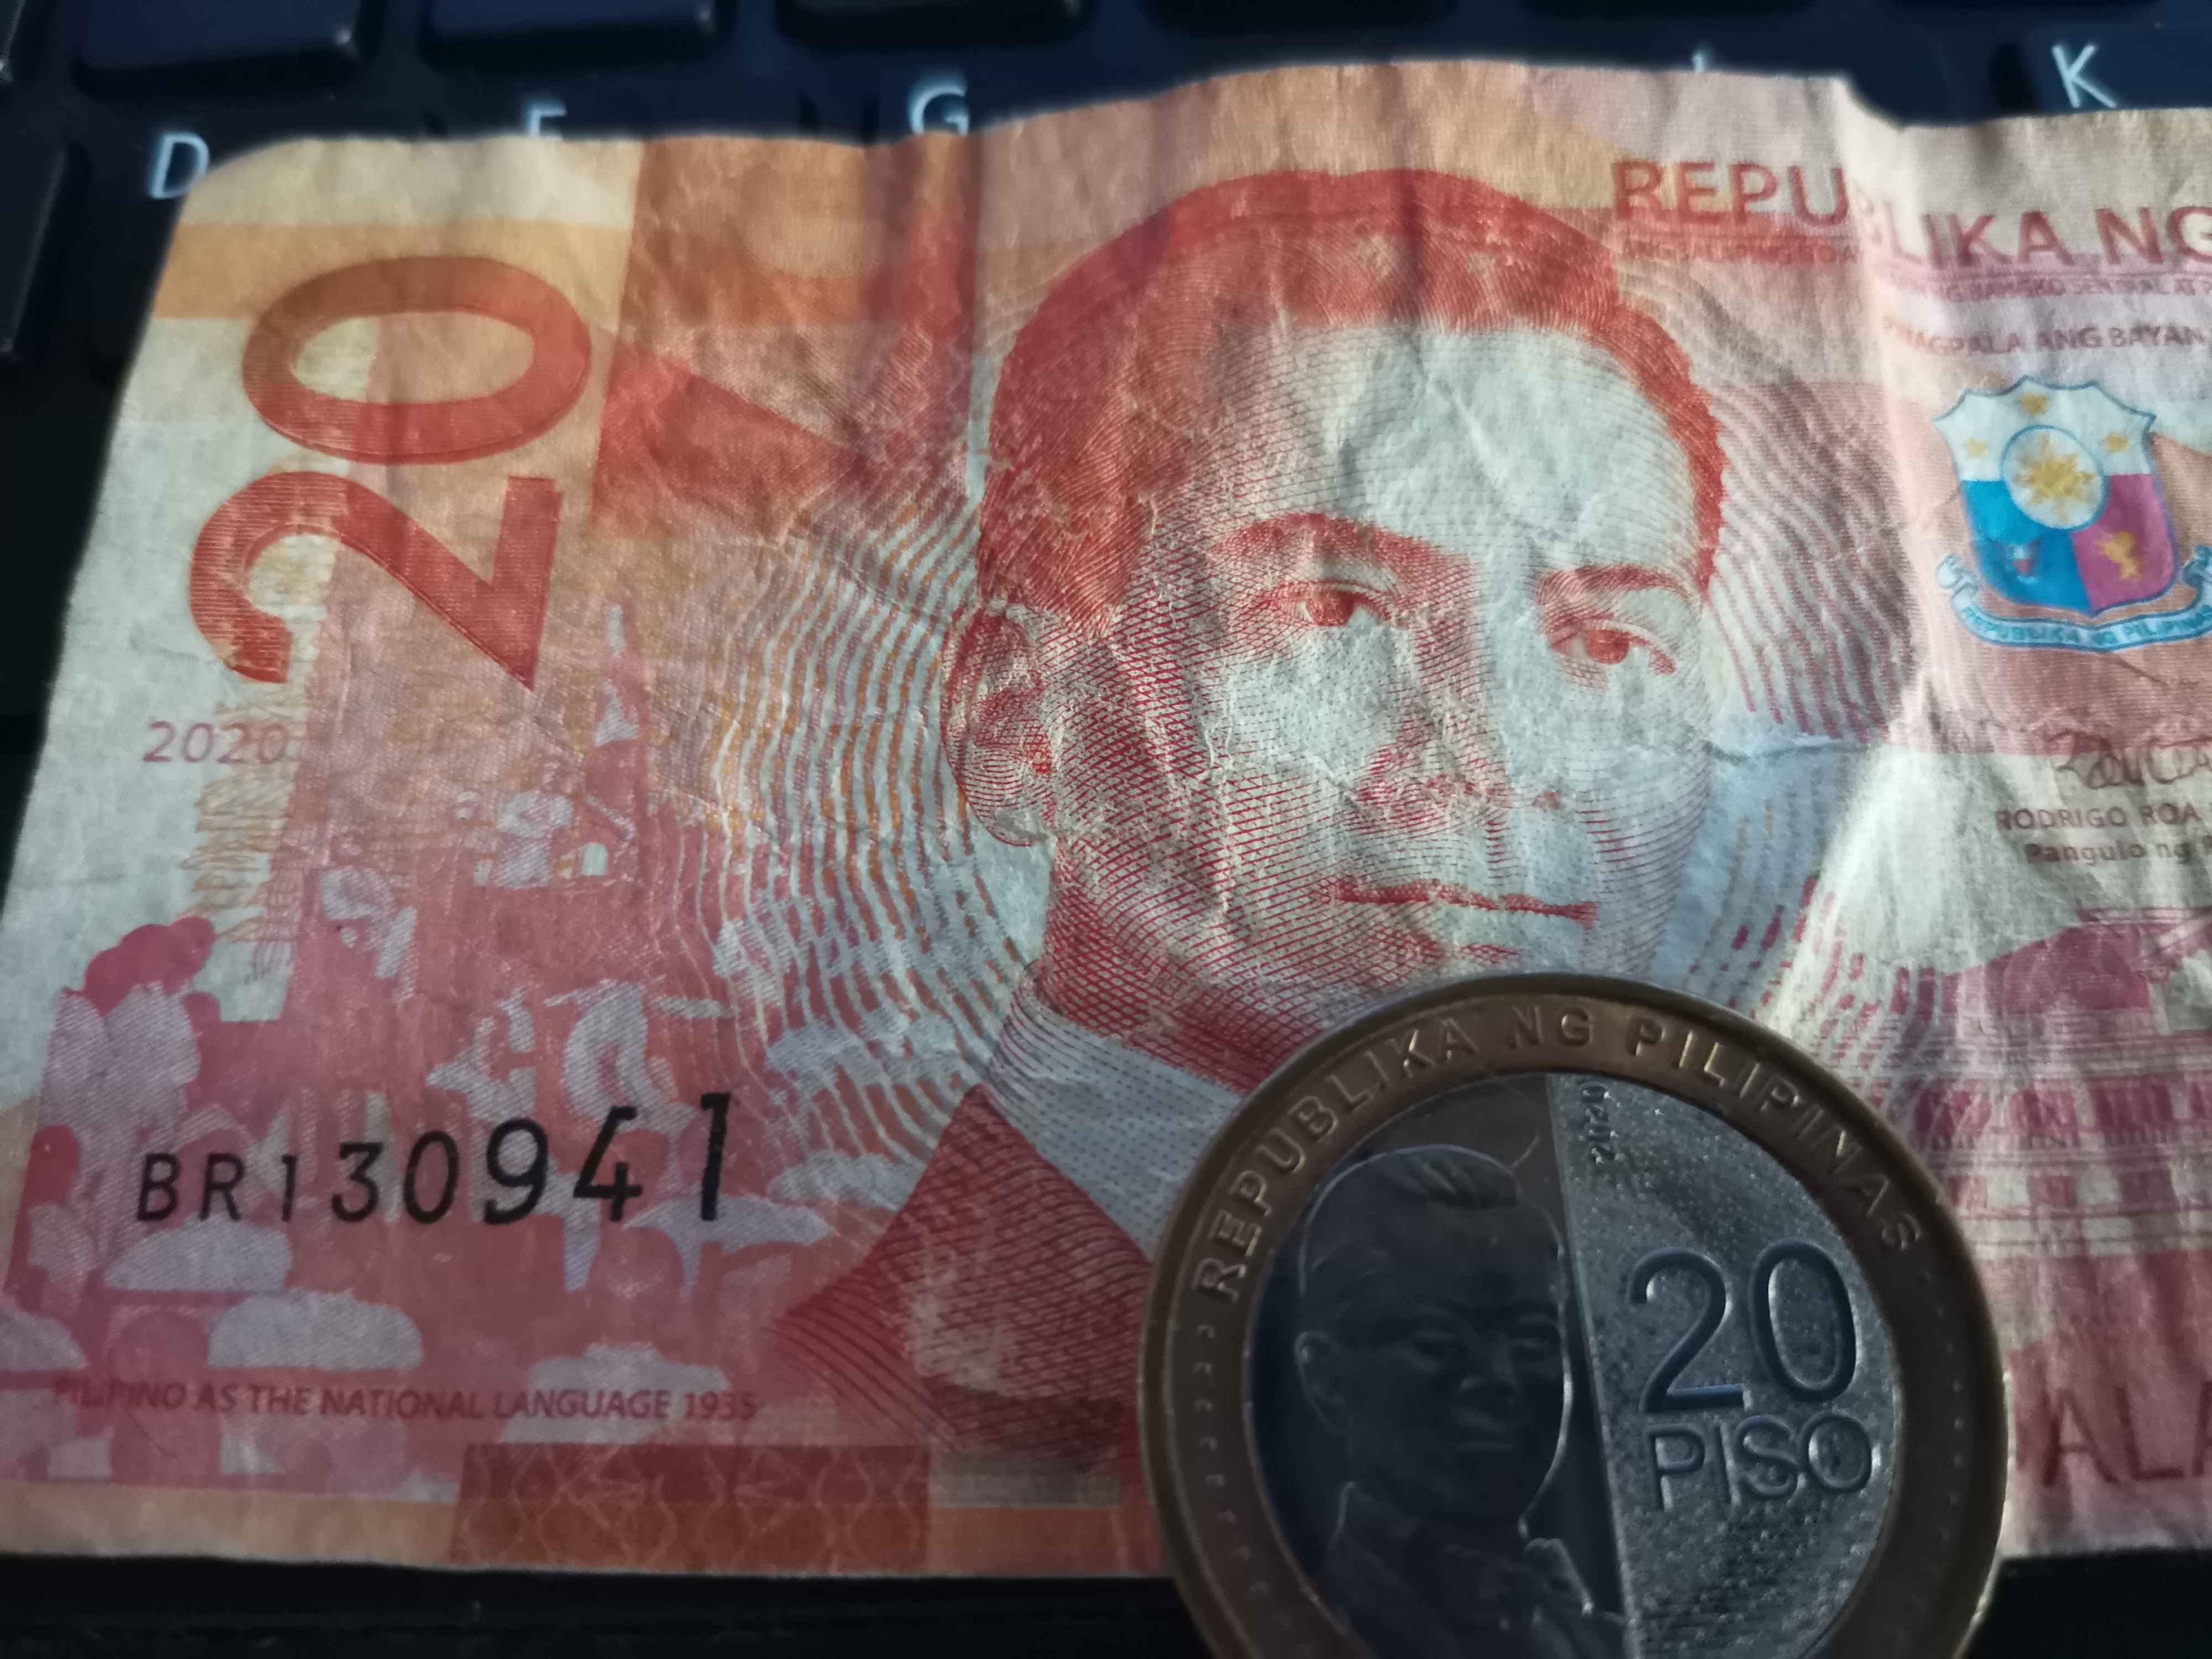 P20 banknote remains legal tender –BSP